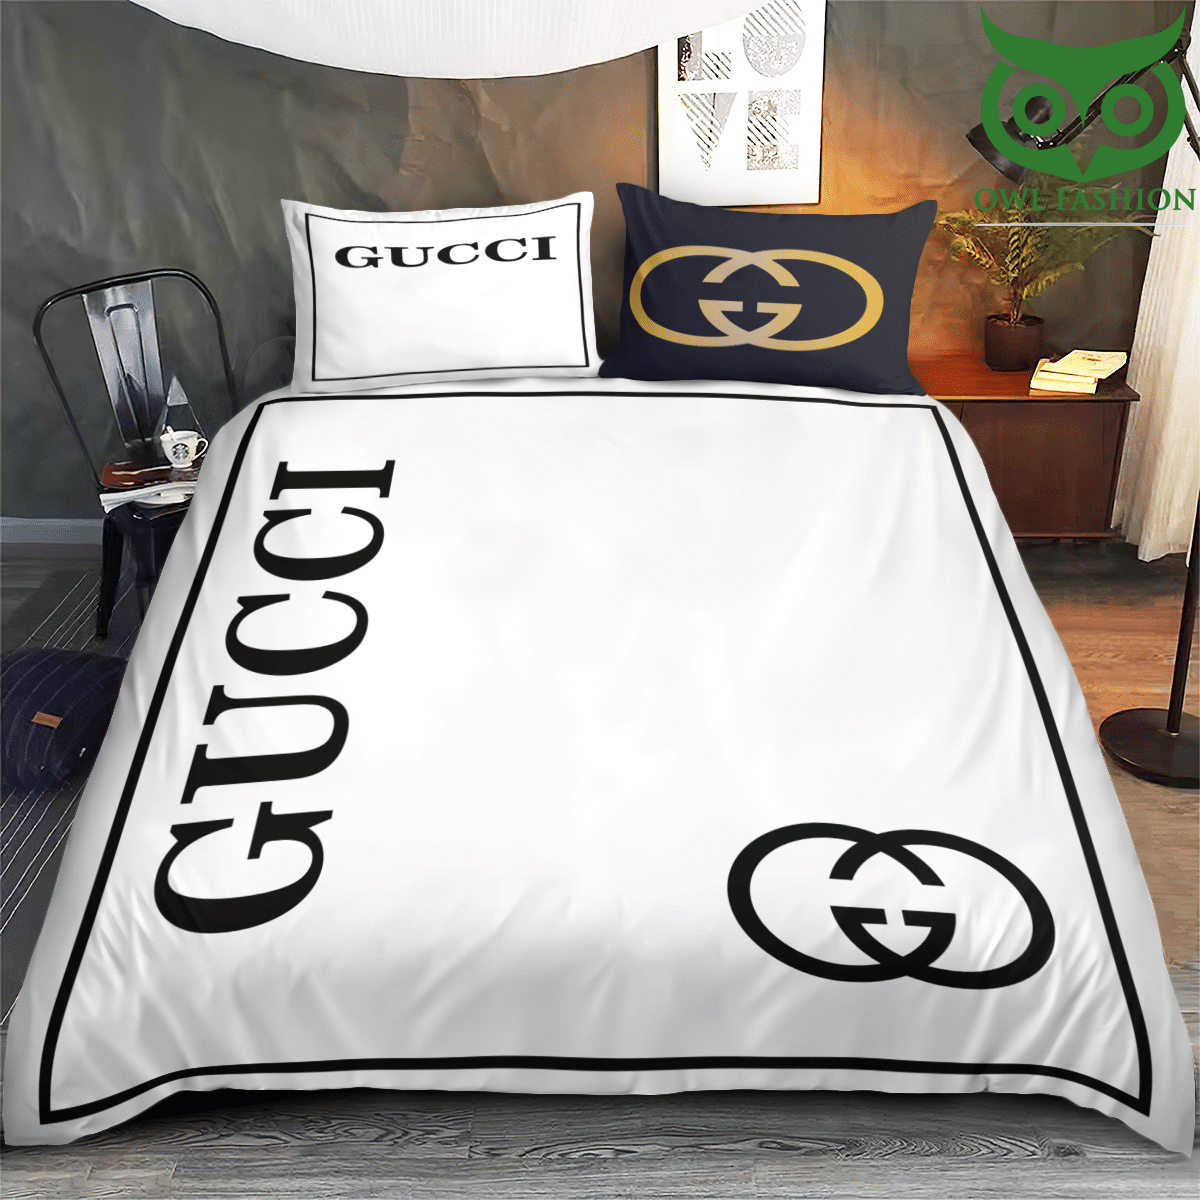 Black and white Gucci bedding set